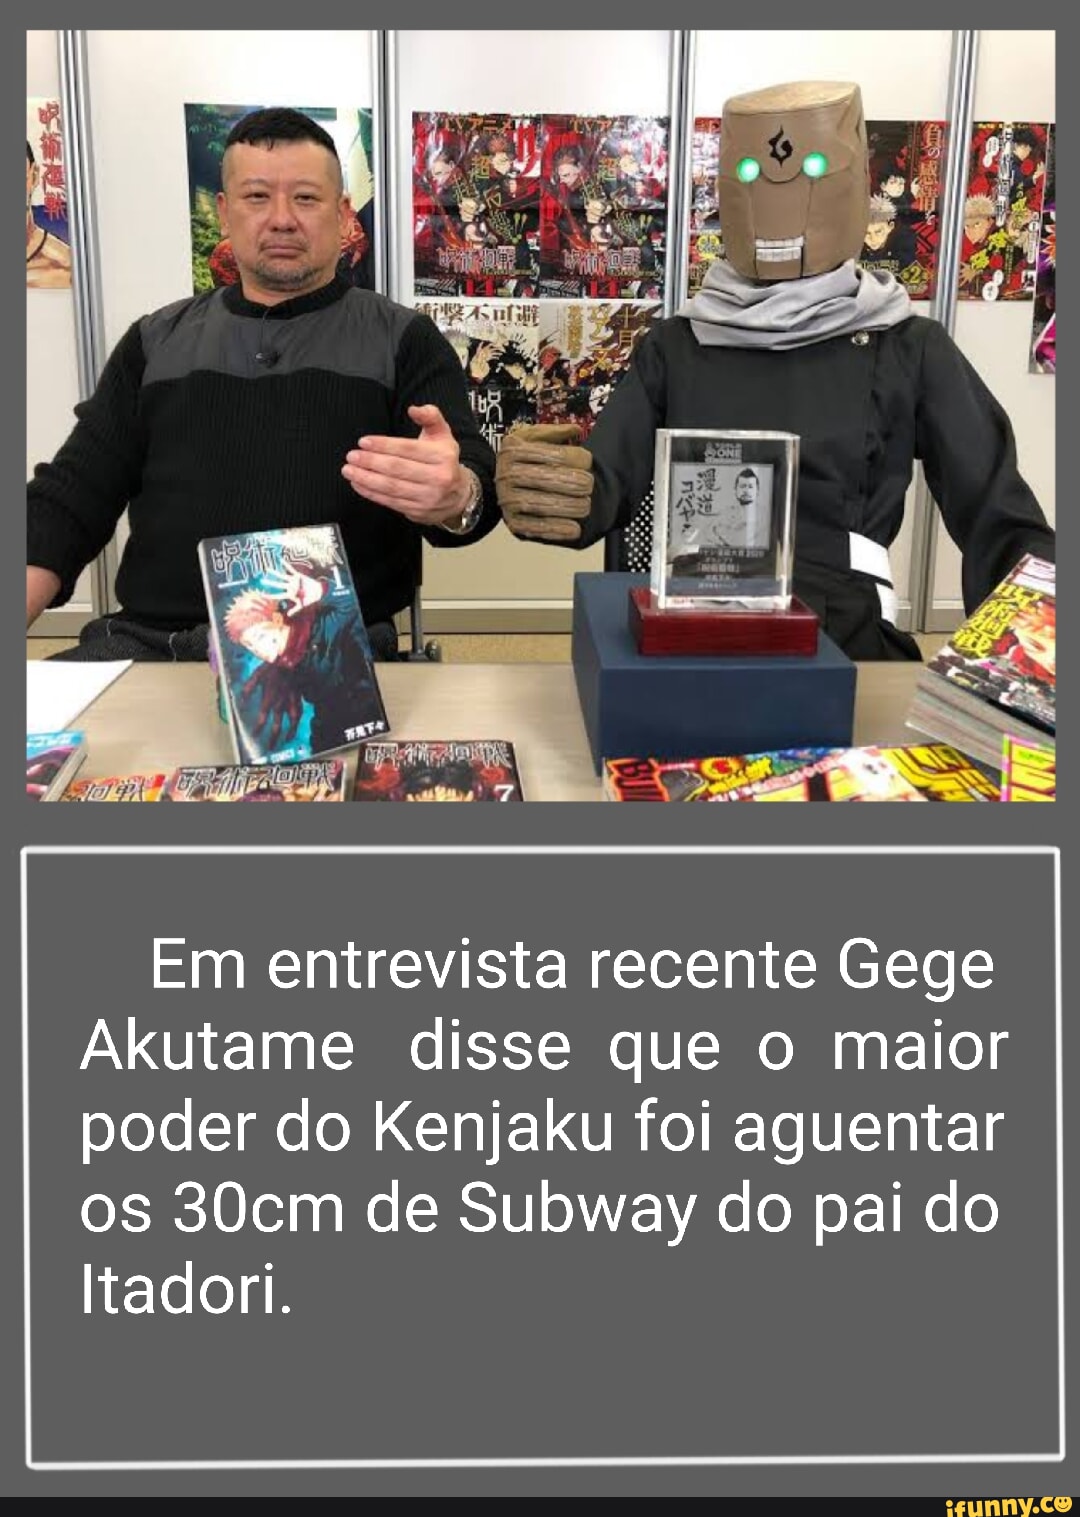 Mês LGBT do Subway surfers Pacote Infinito ecdmh 75% de DESCONTO - iFunny  Brazil